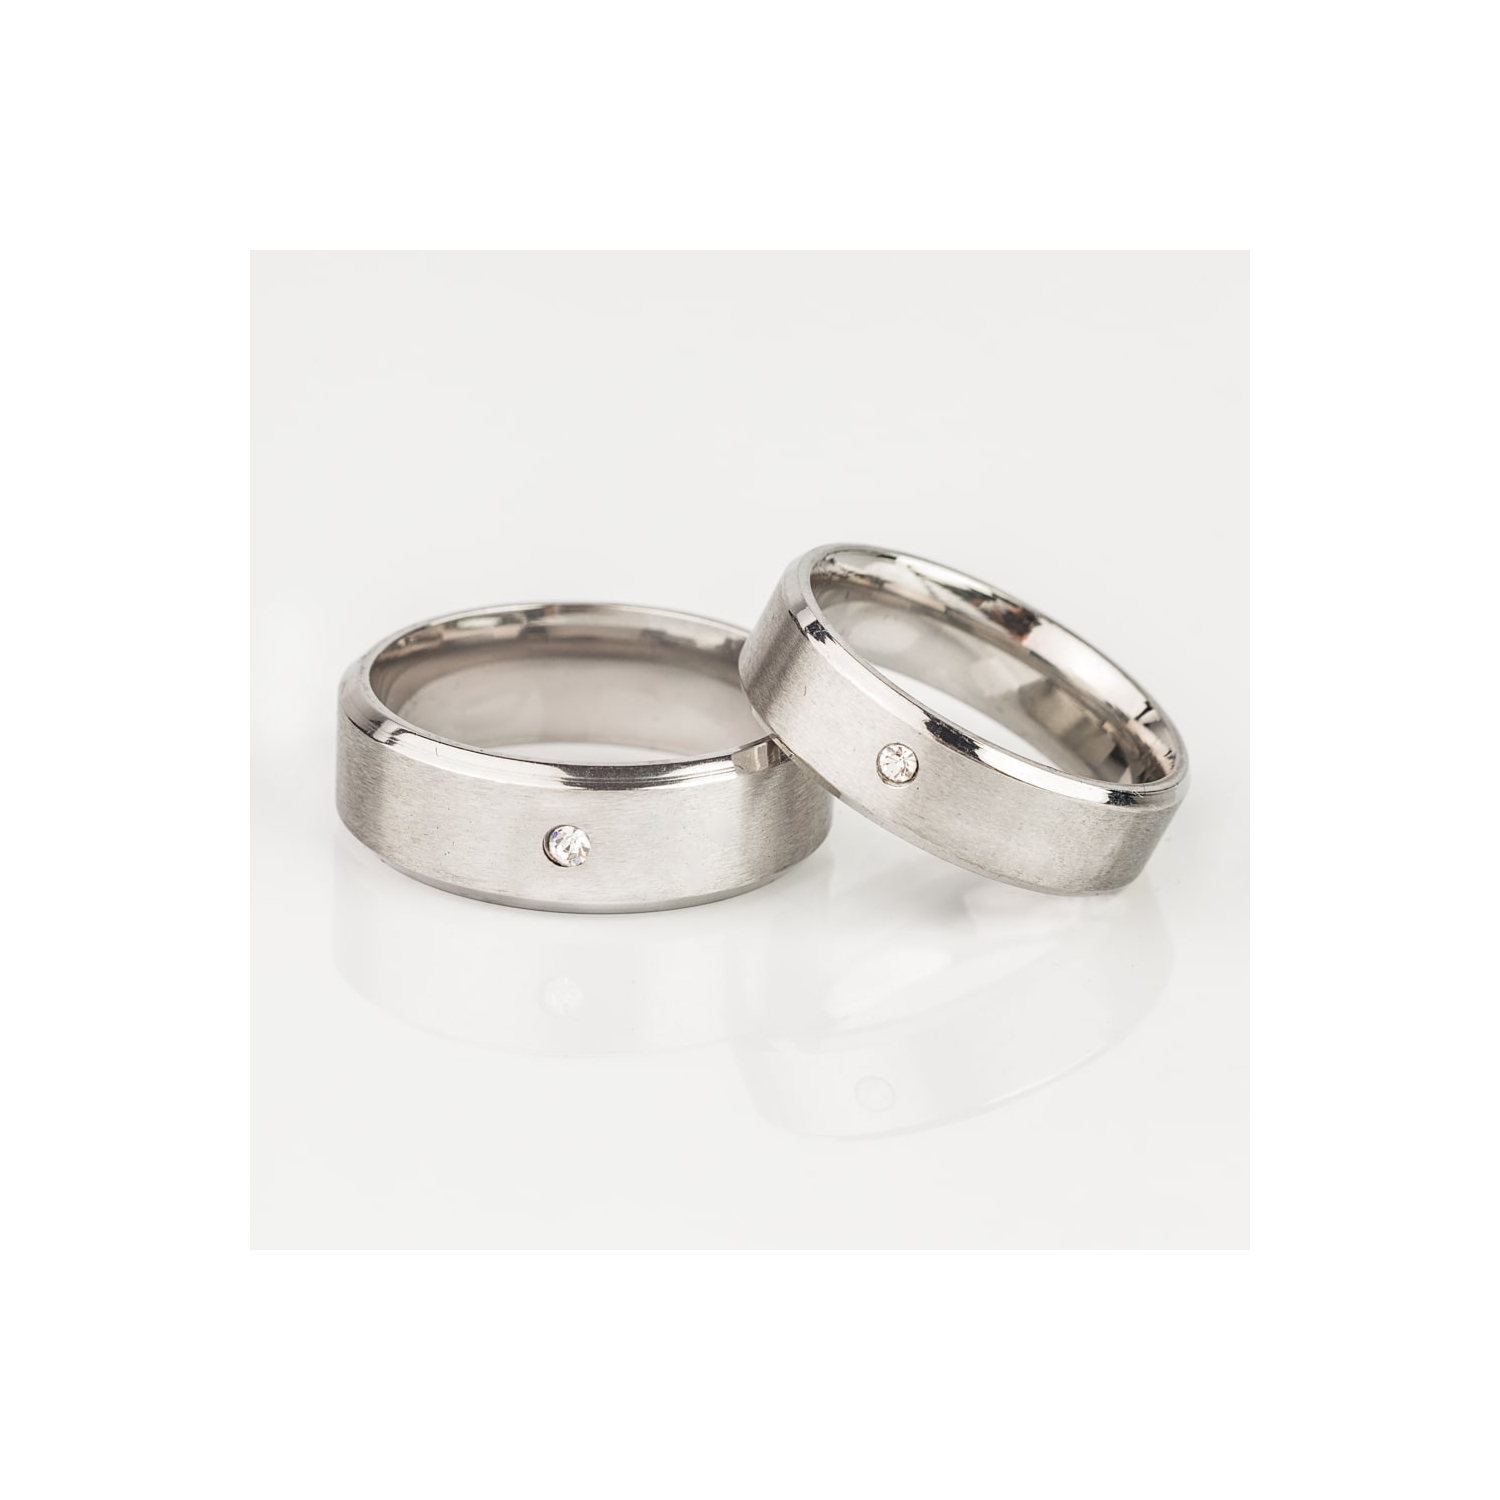 Golden wedding rings with diamonds "VMA 117"